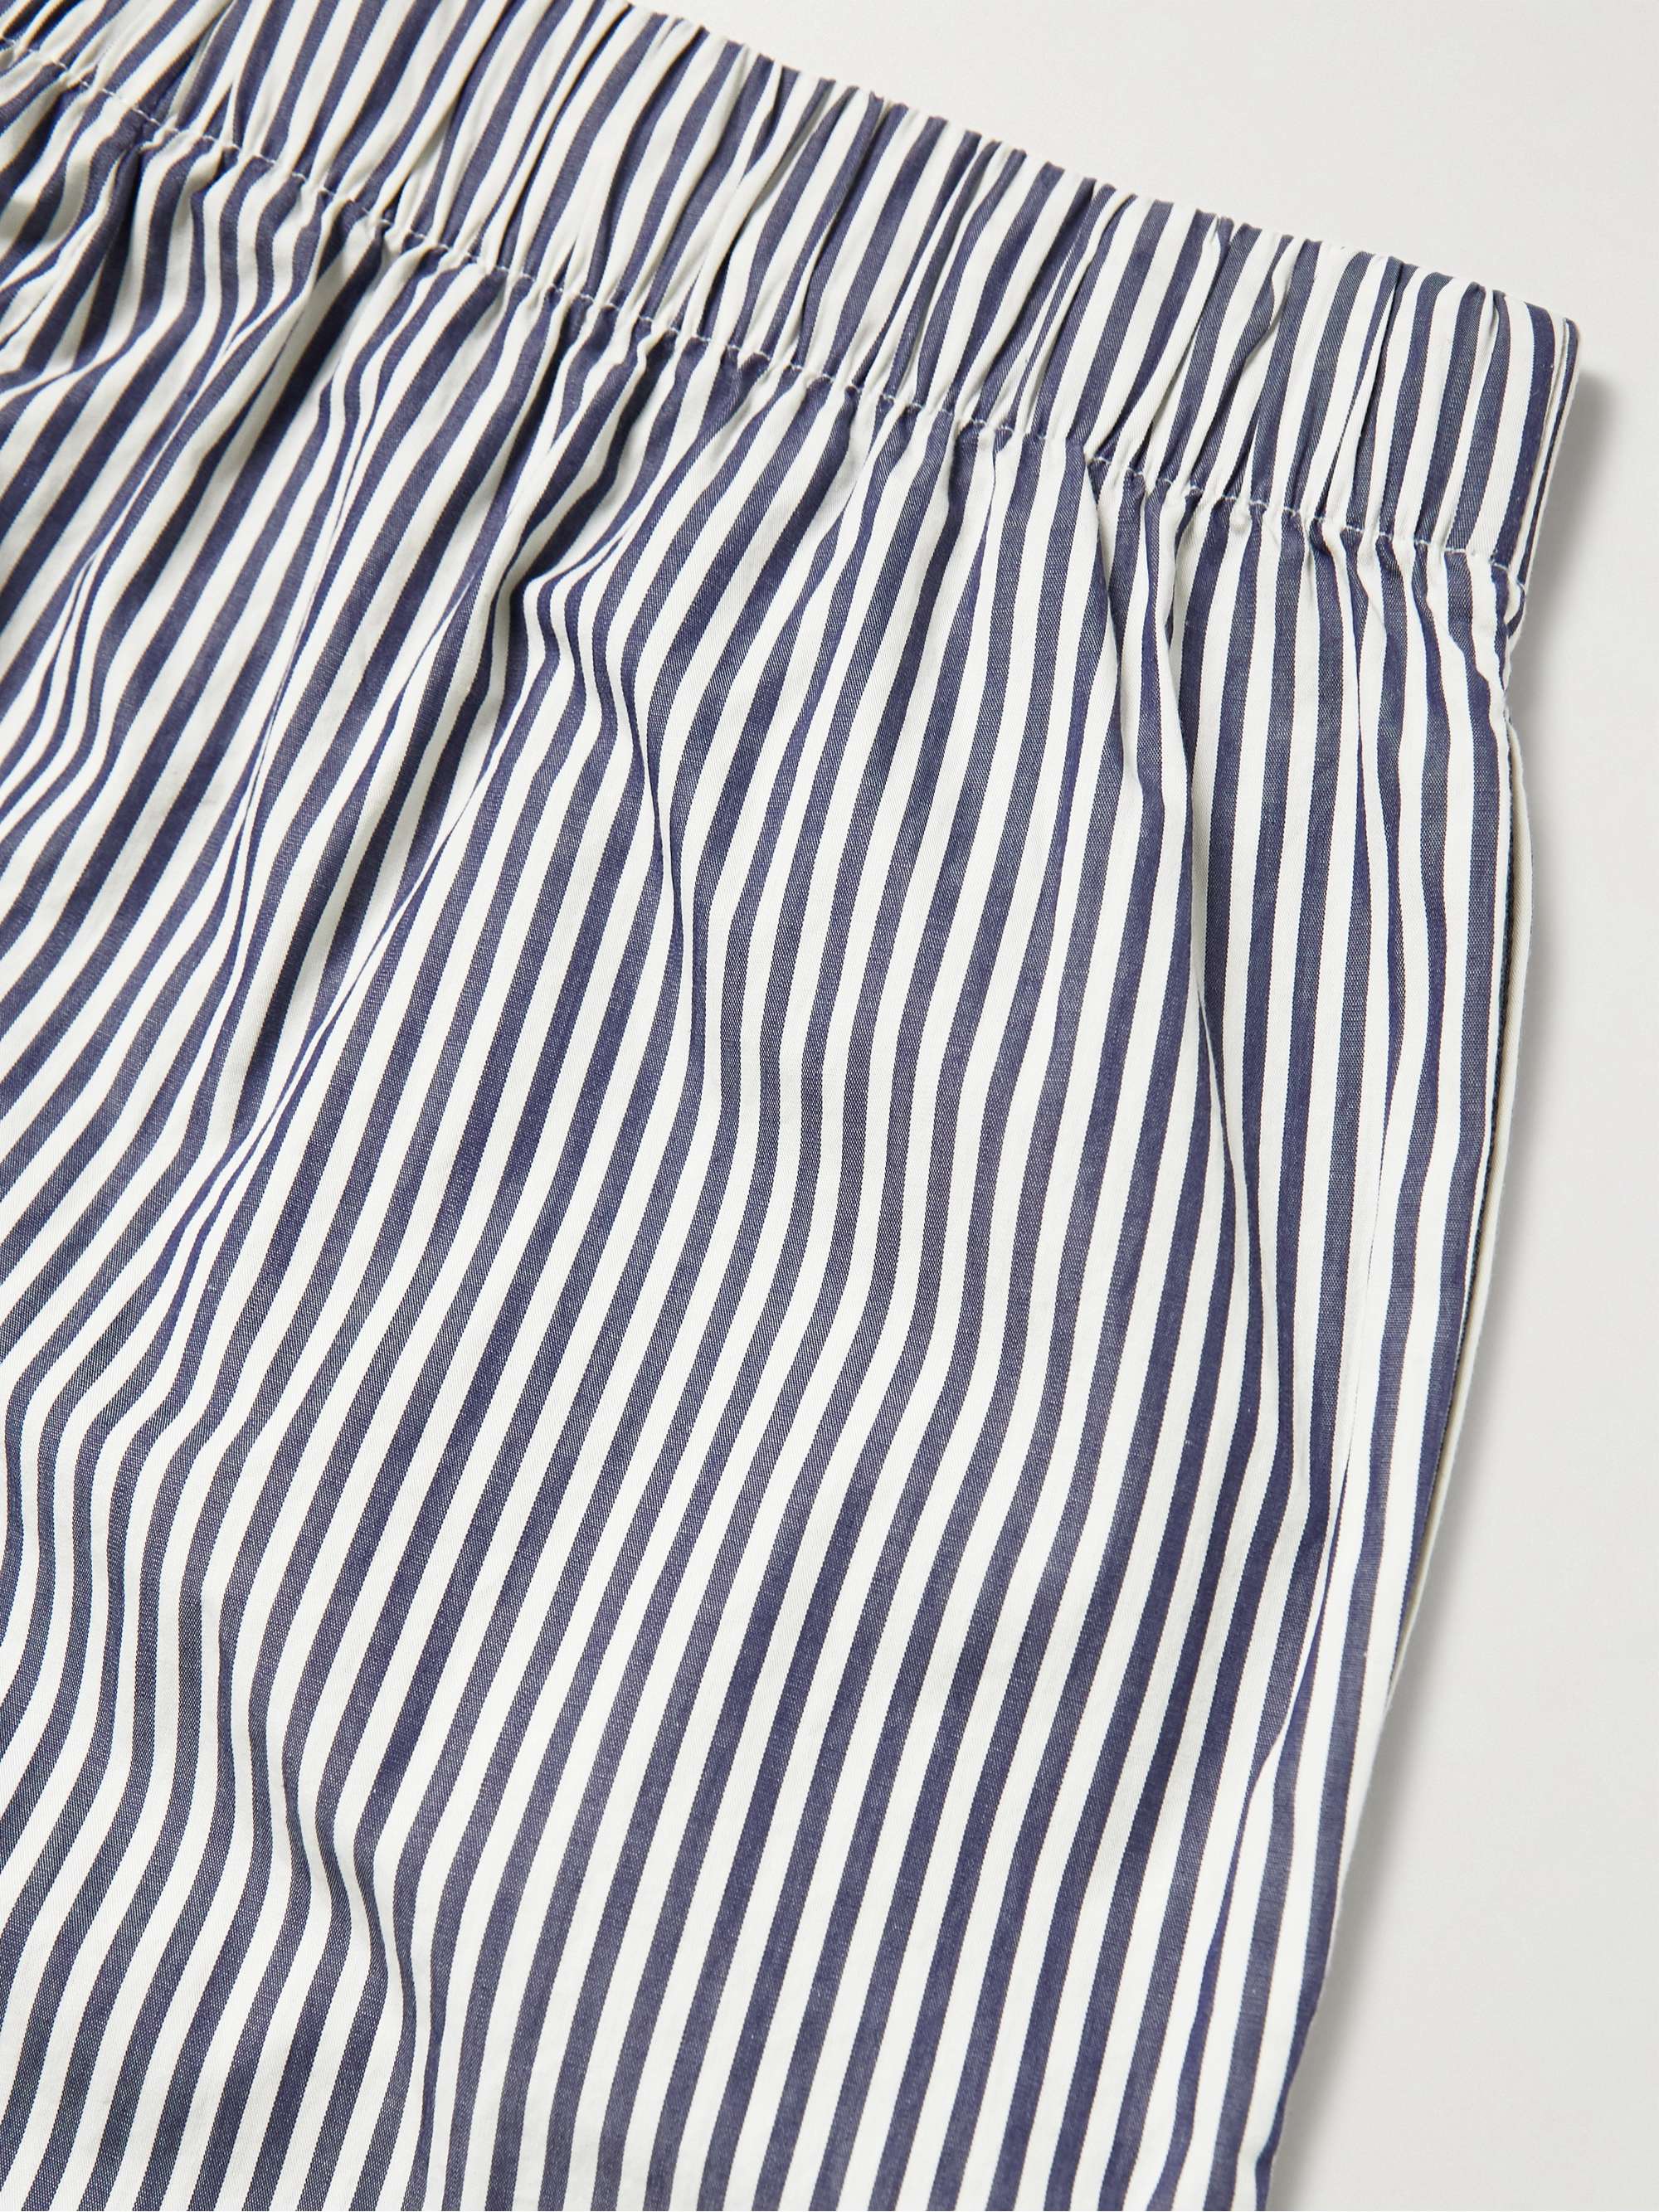 TEKLA Striped Cotton-Poplin Pyjama Trousers